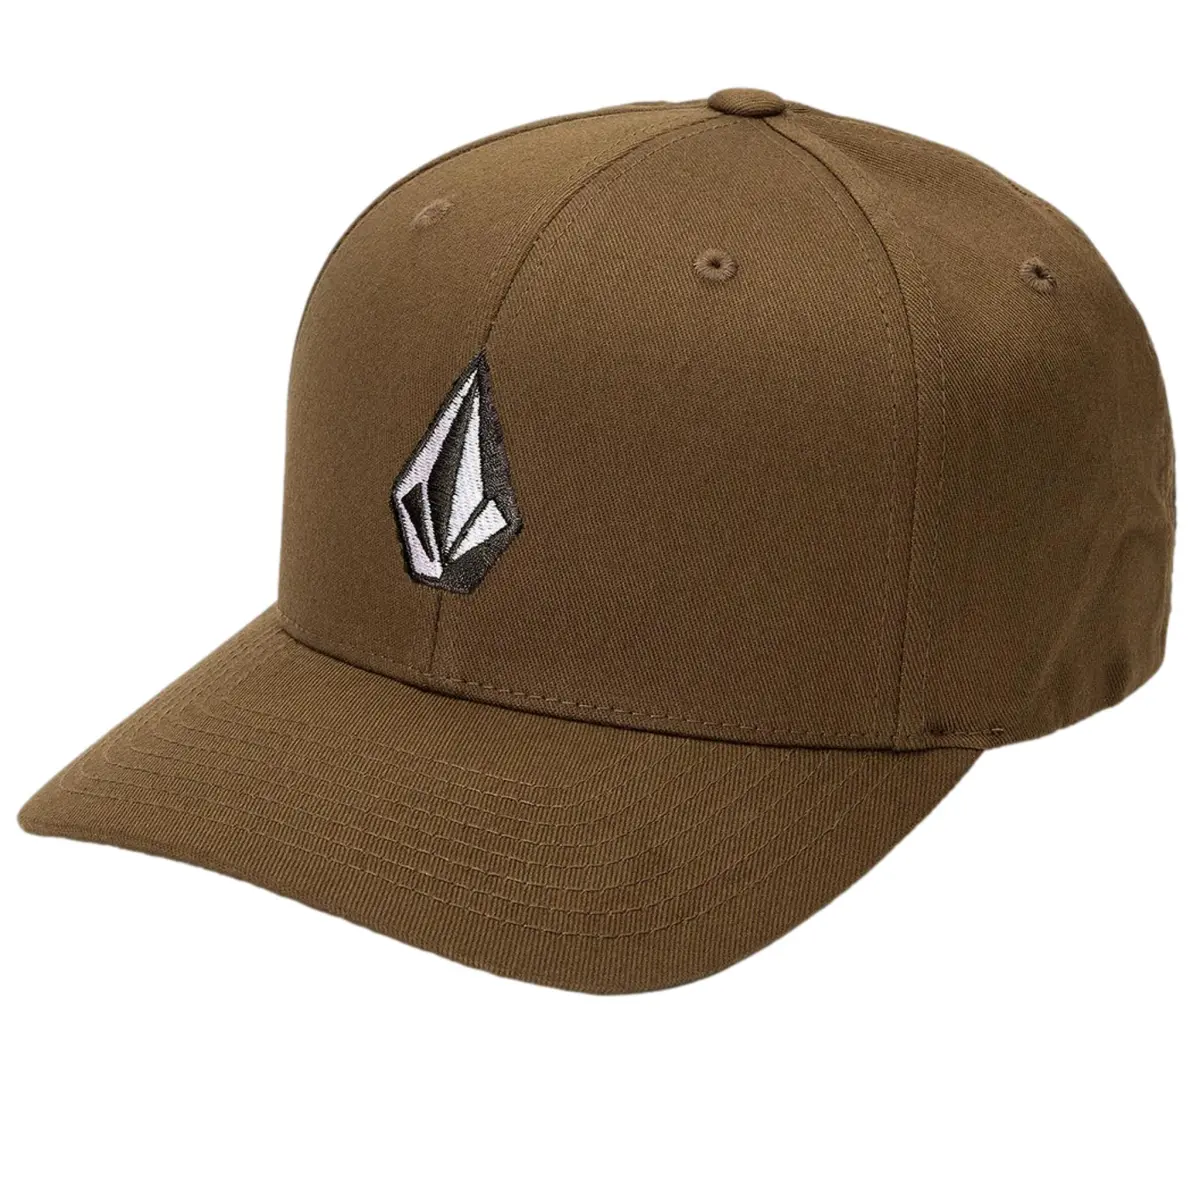 Volcom fullstone flaxfit hat brown